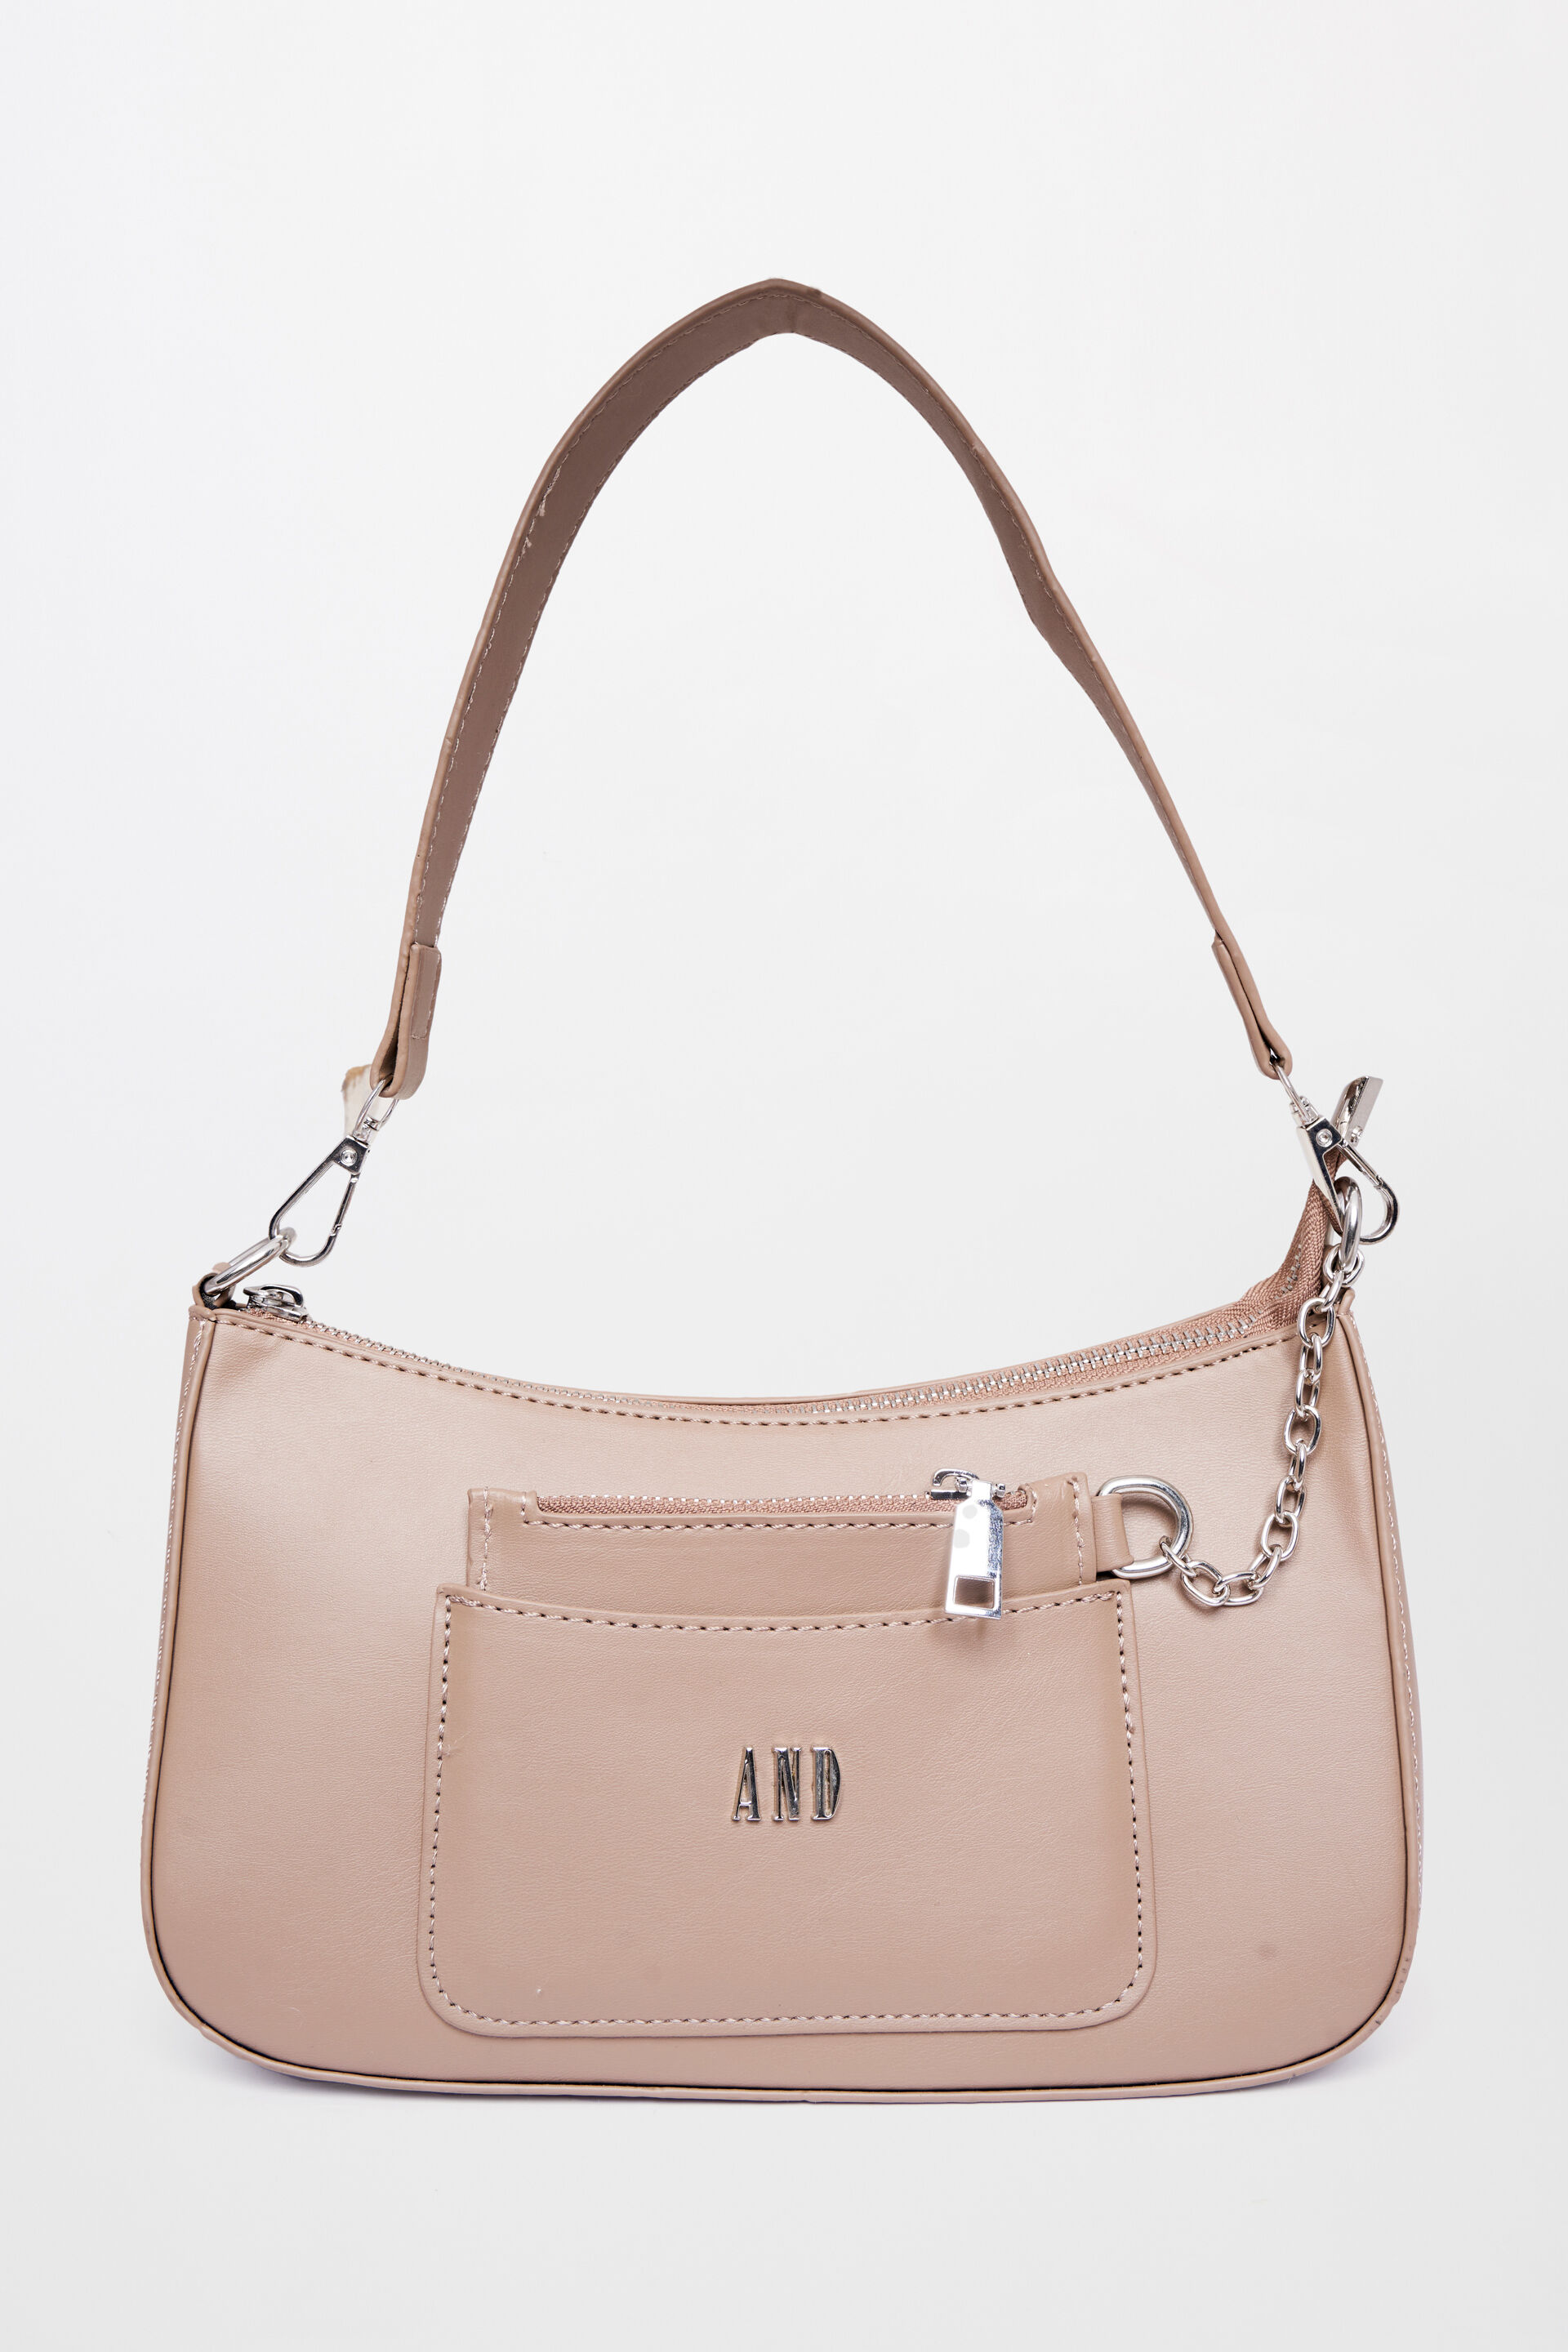 Handbags On Sale : Buy Ladies Handbags Online In India | by jewlot  marketing | Medium